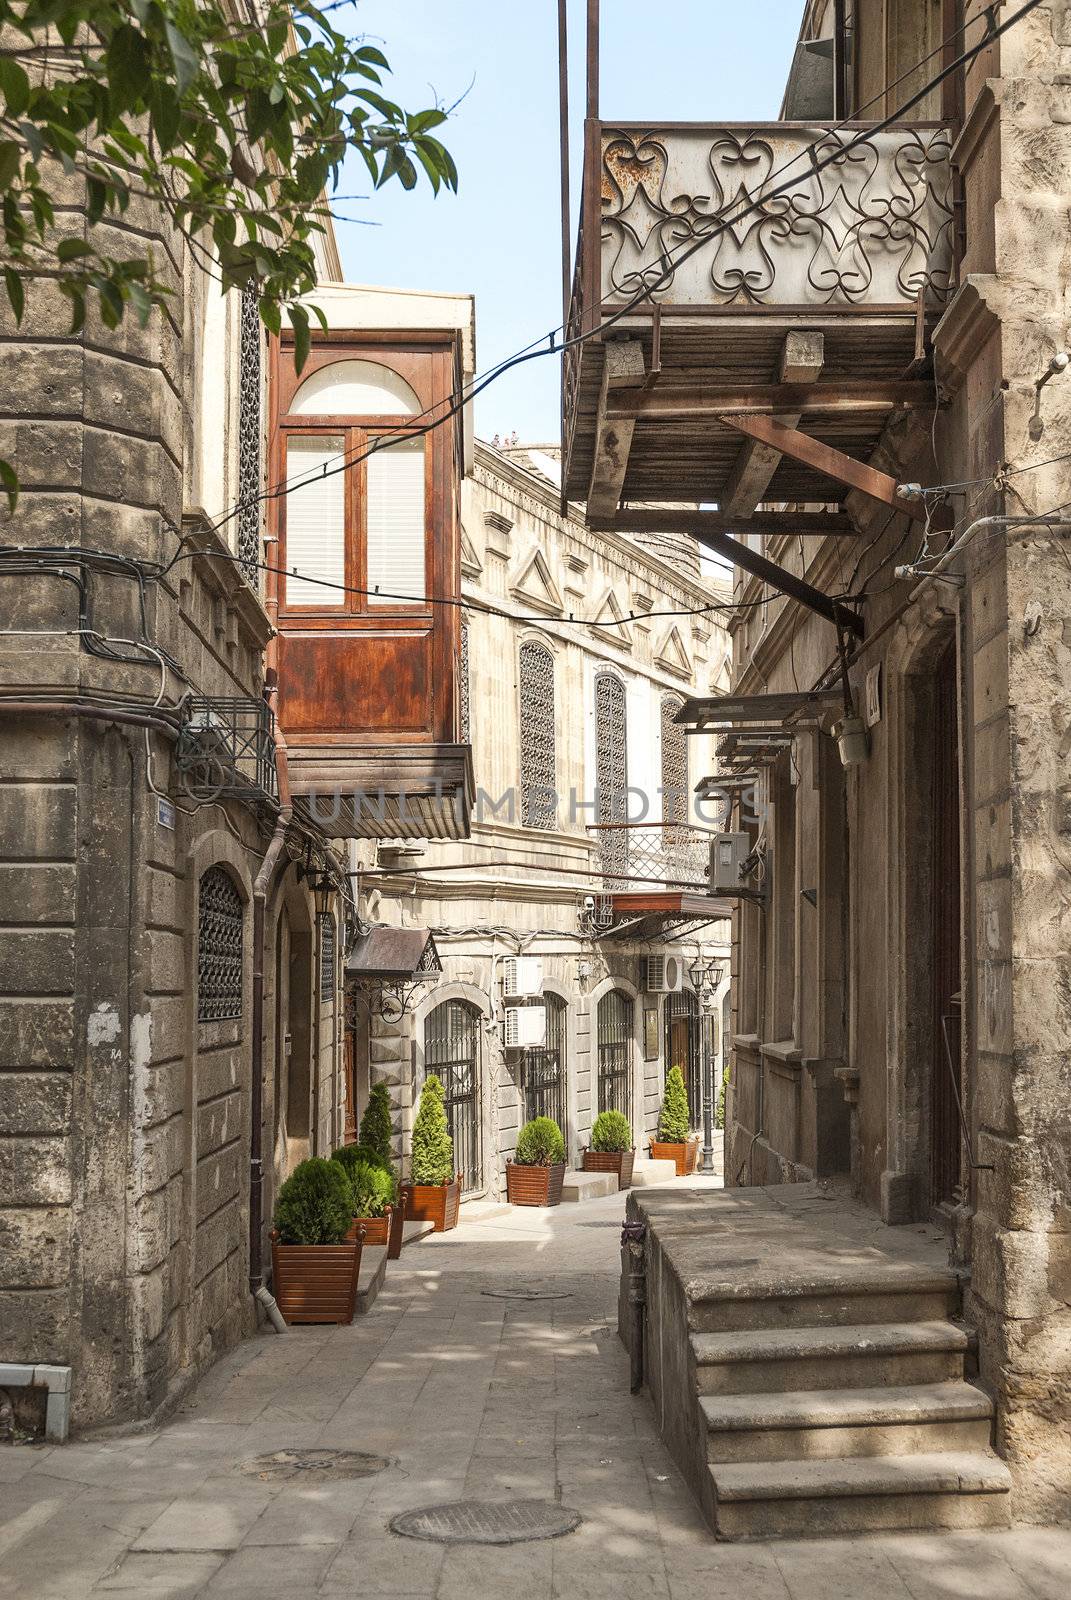 architecture in baku azerbaijan old town street